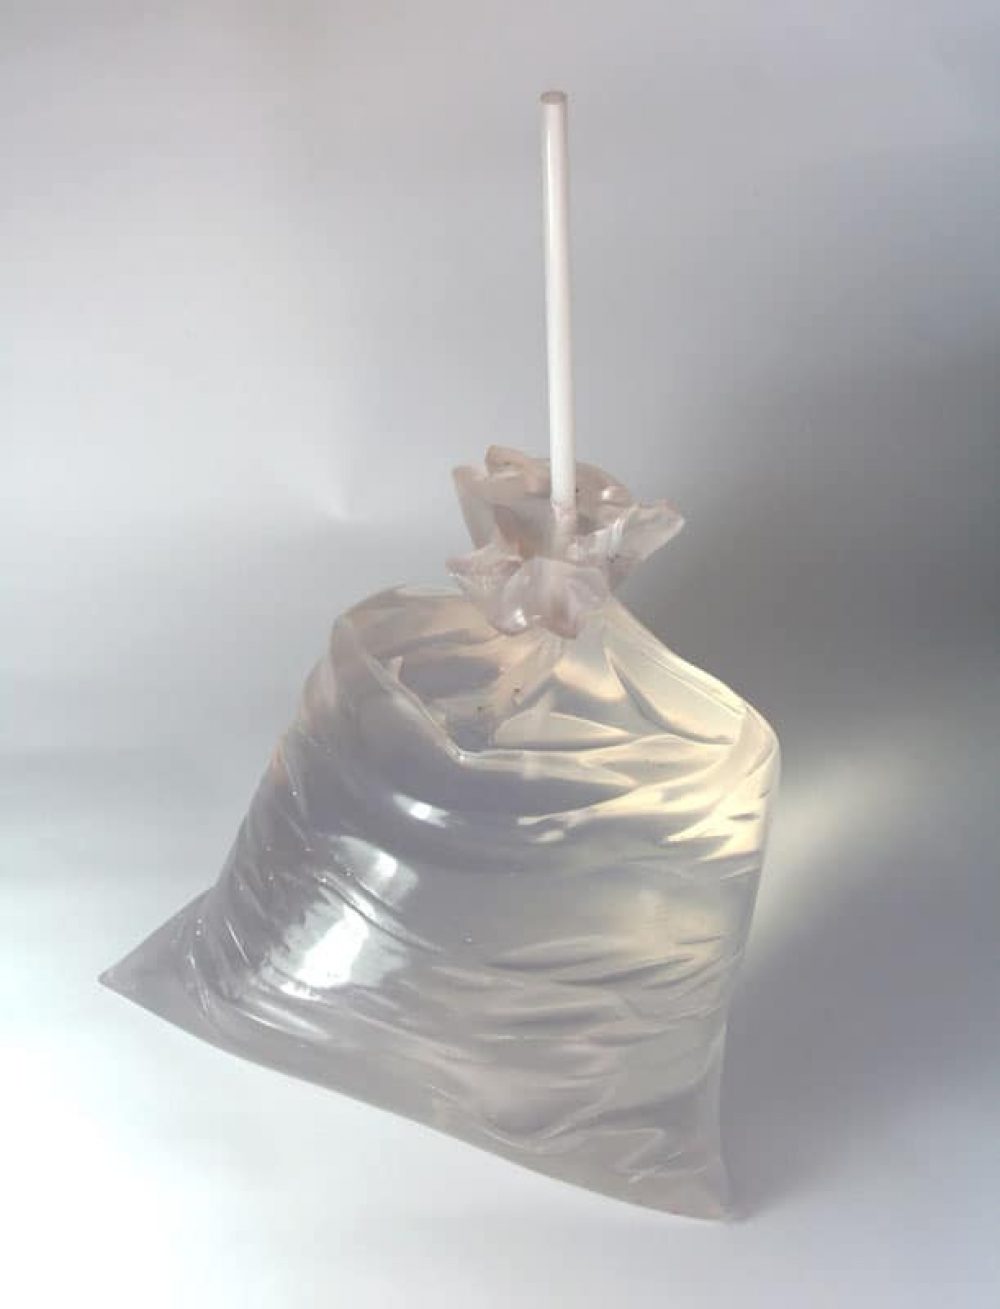 "Space in plastic bag" 2009